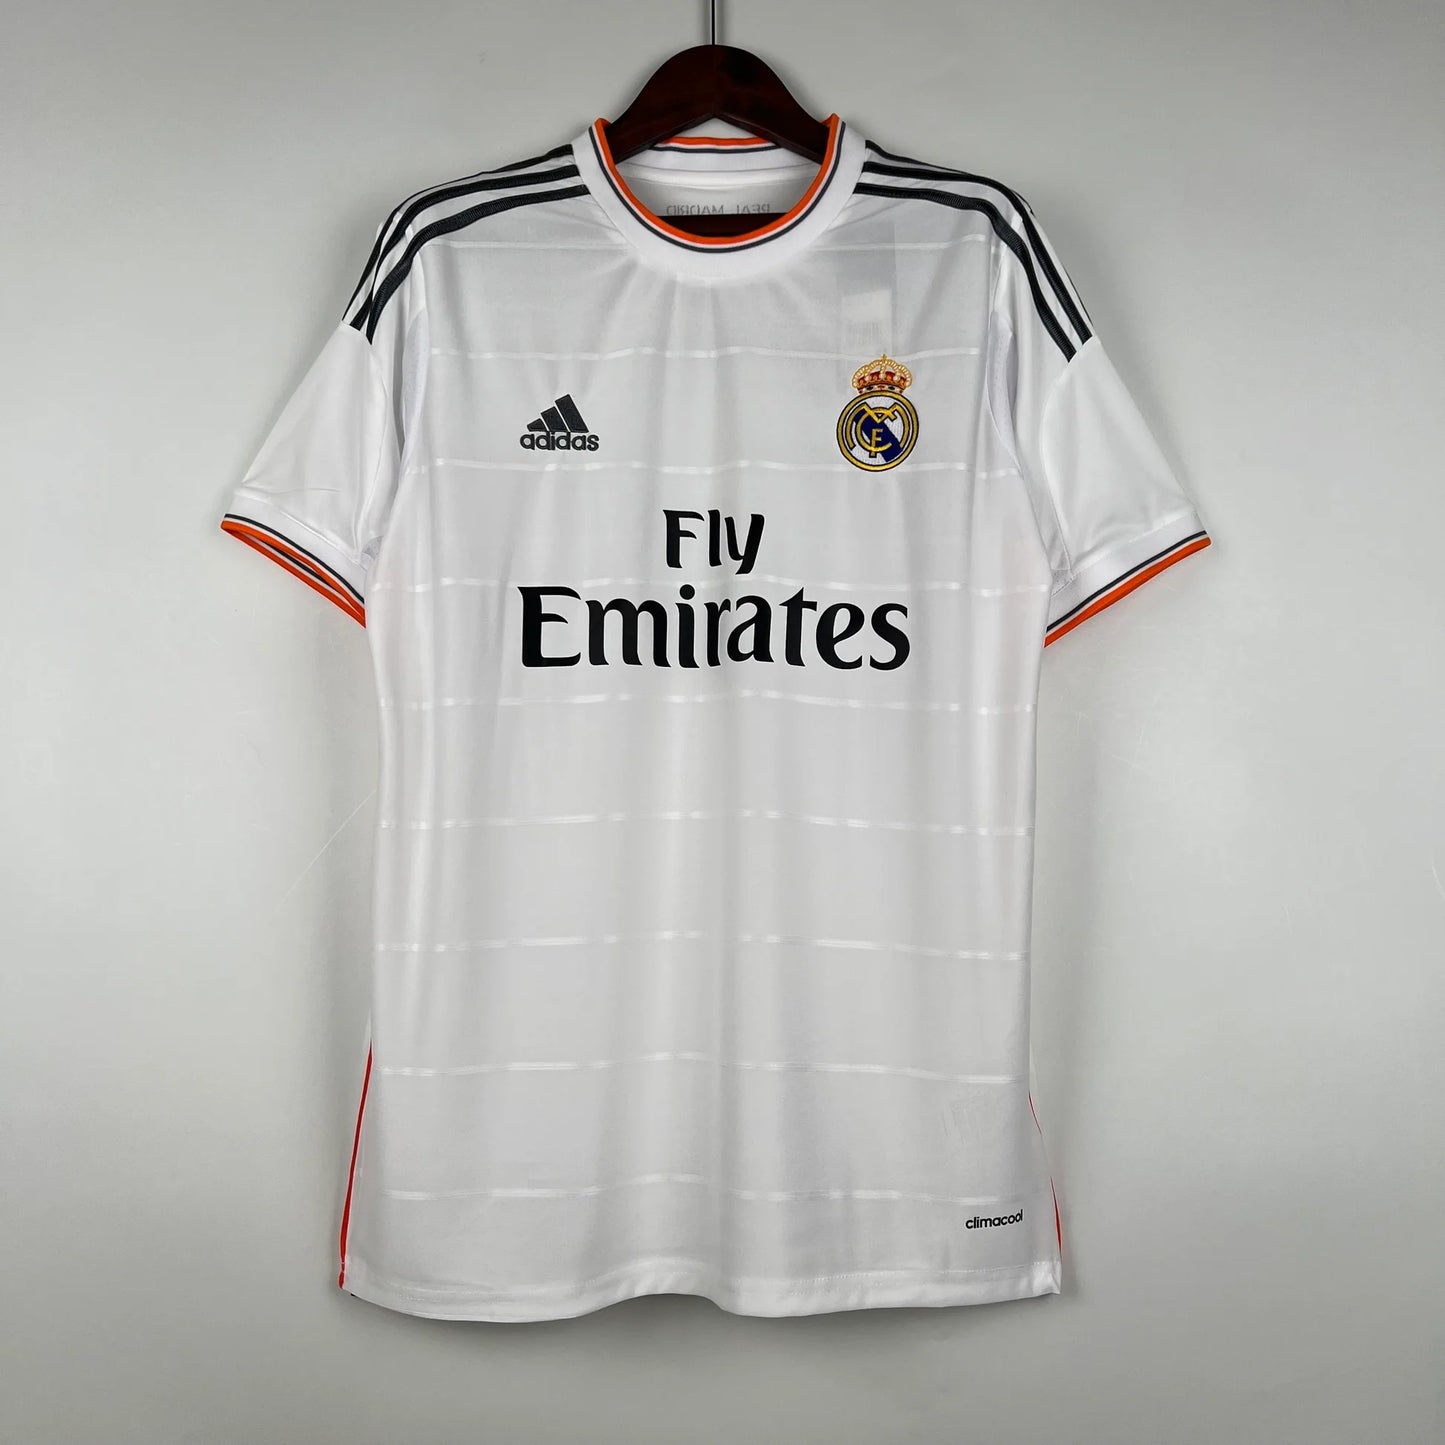 Real Madrid 2013/2014 Home Kit